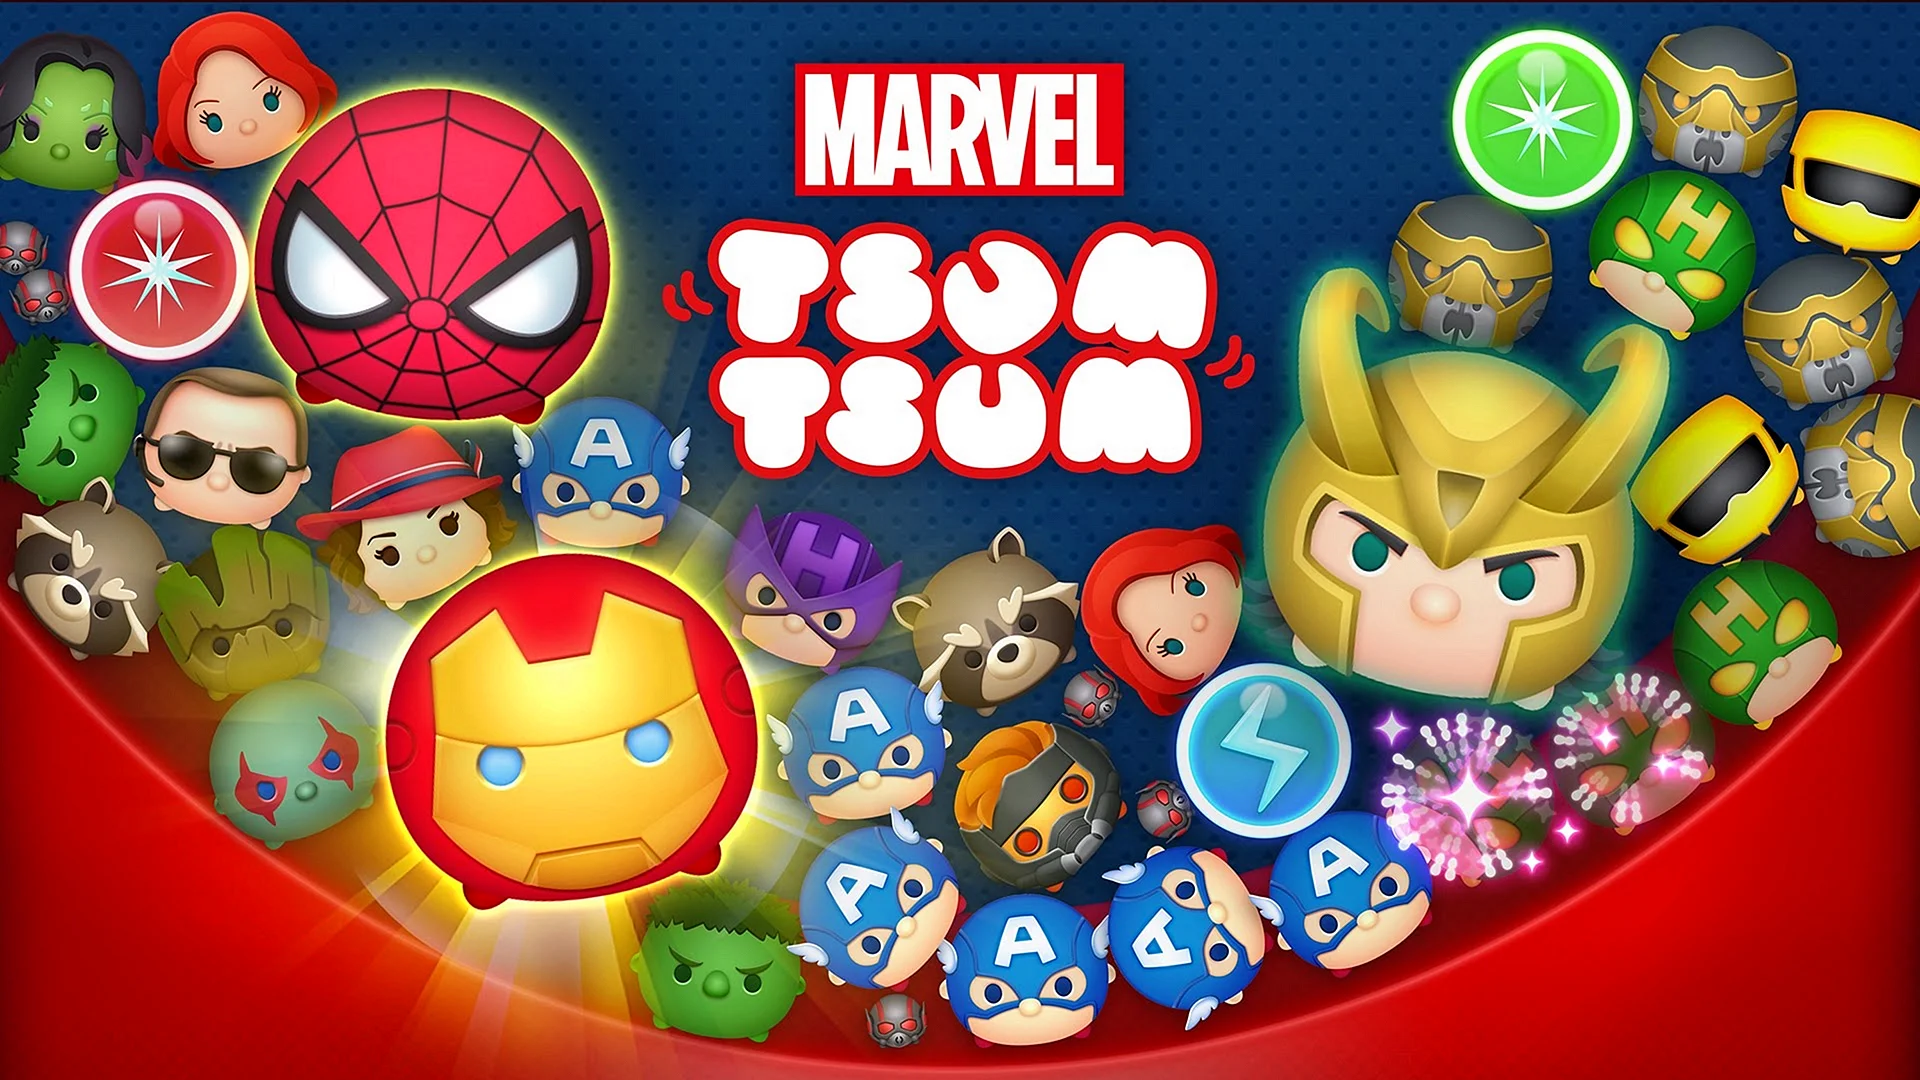 Marvel Tsum Tsum Wallpaper